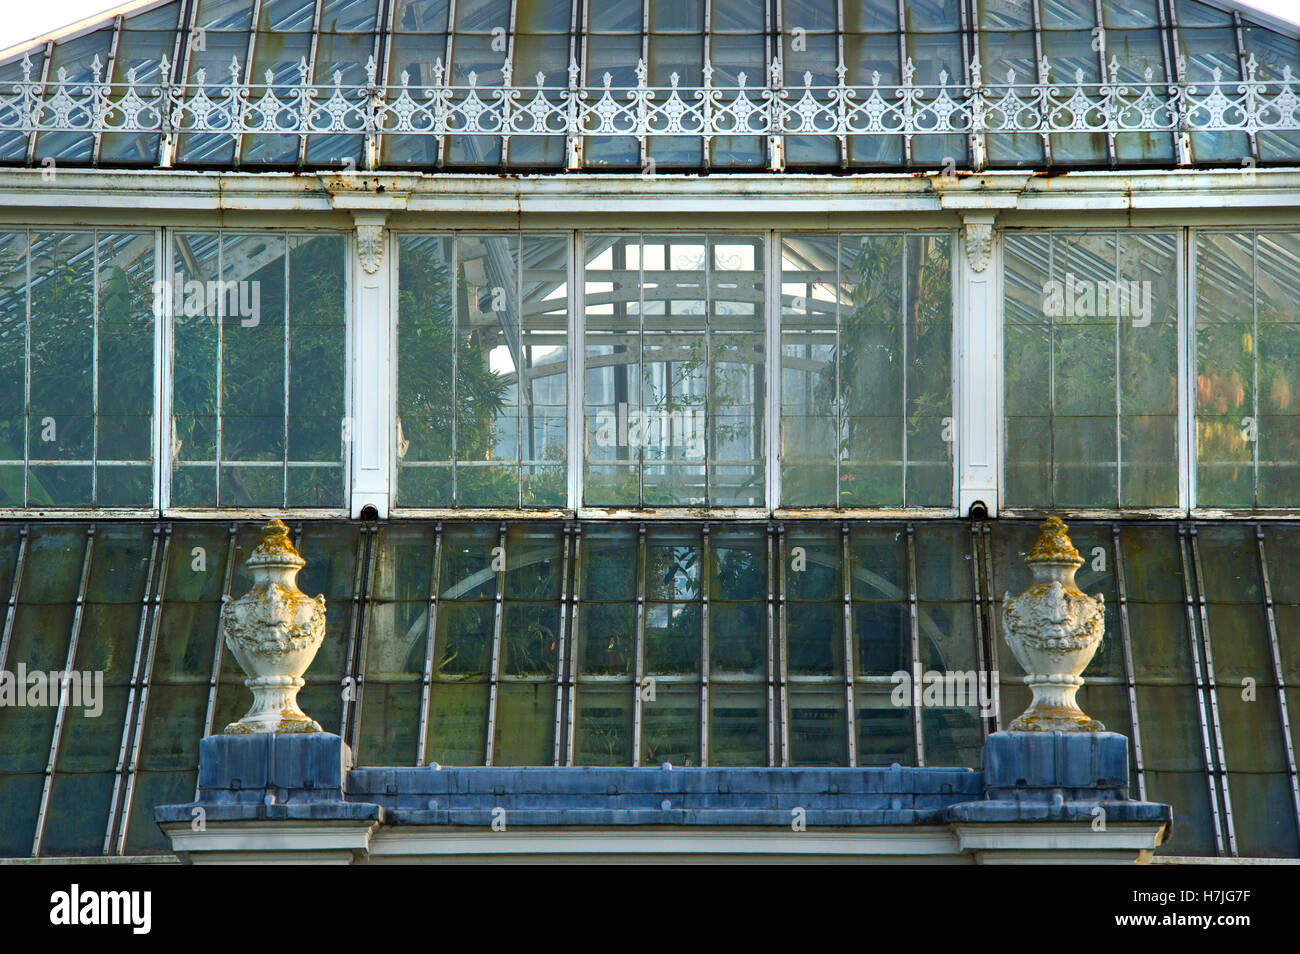 Temperate House - Victorian era cast iron glasshouse - in Kew Gardens, London Stock Photo